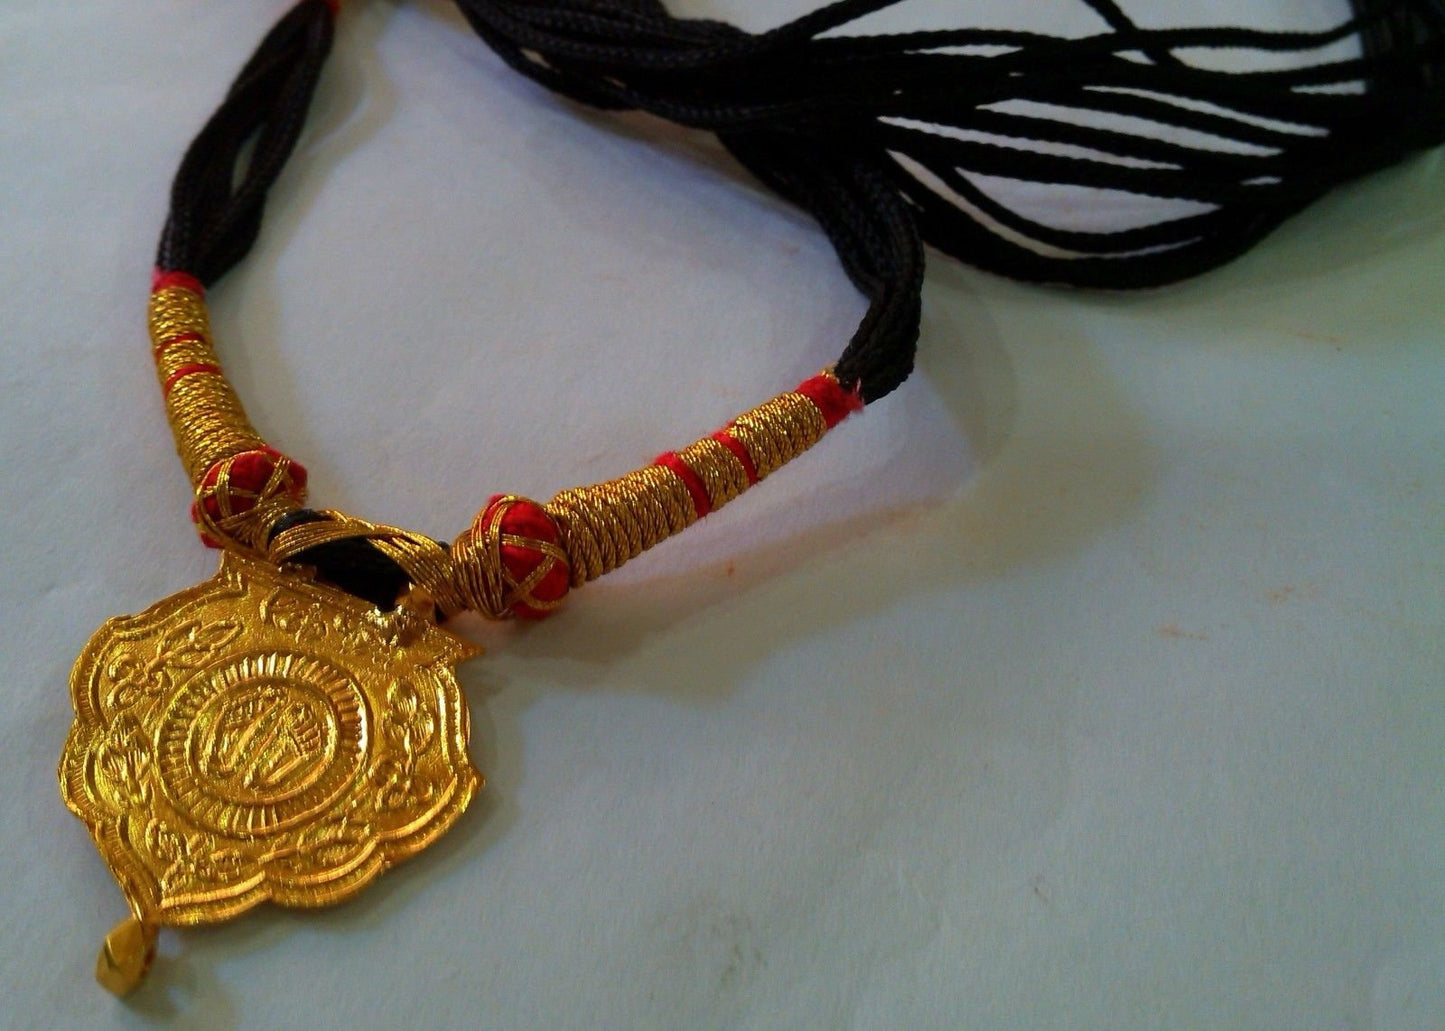 22kt yellow gold handmade fabulous tribal pendant shree nathji print pendant antique ethnic tribal jewelry from rajasthan india - TRIBAL ORNAMENTS